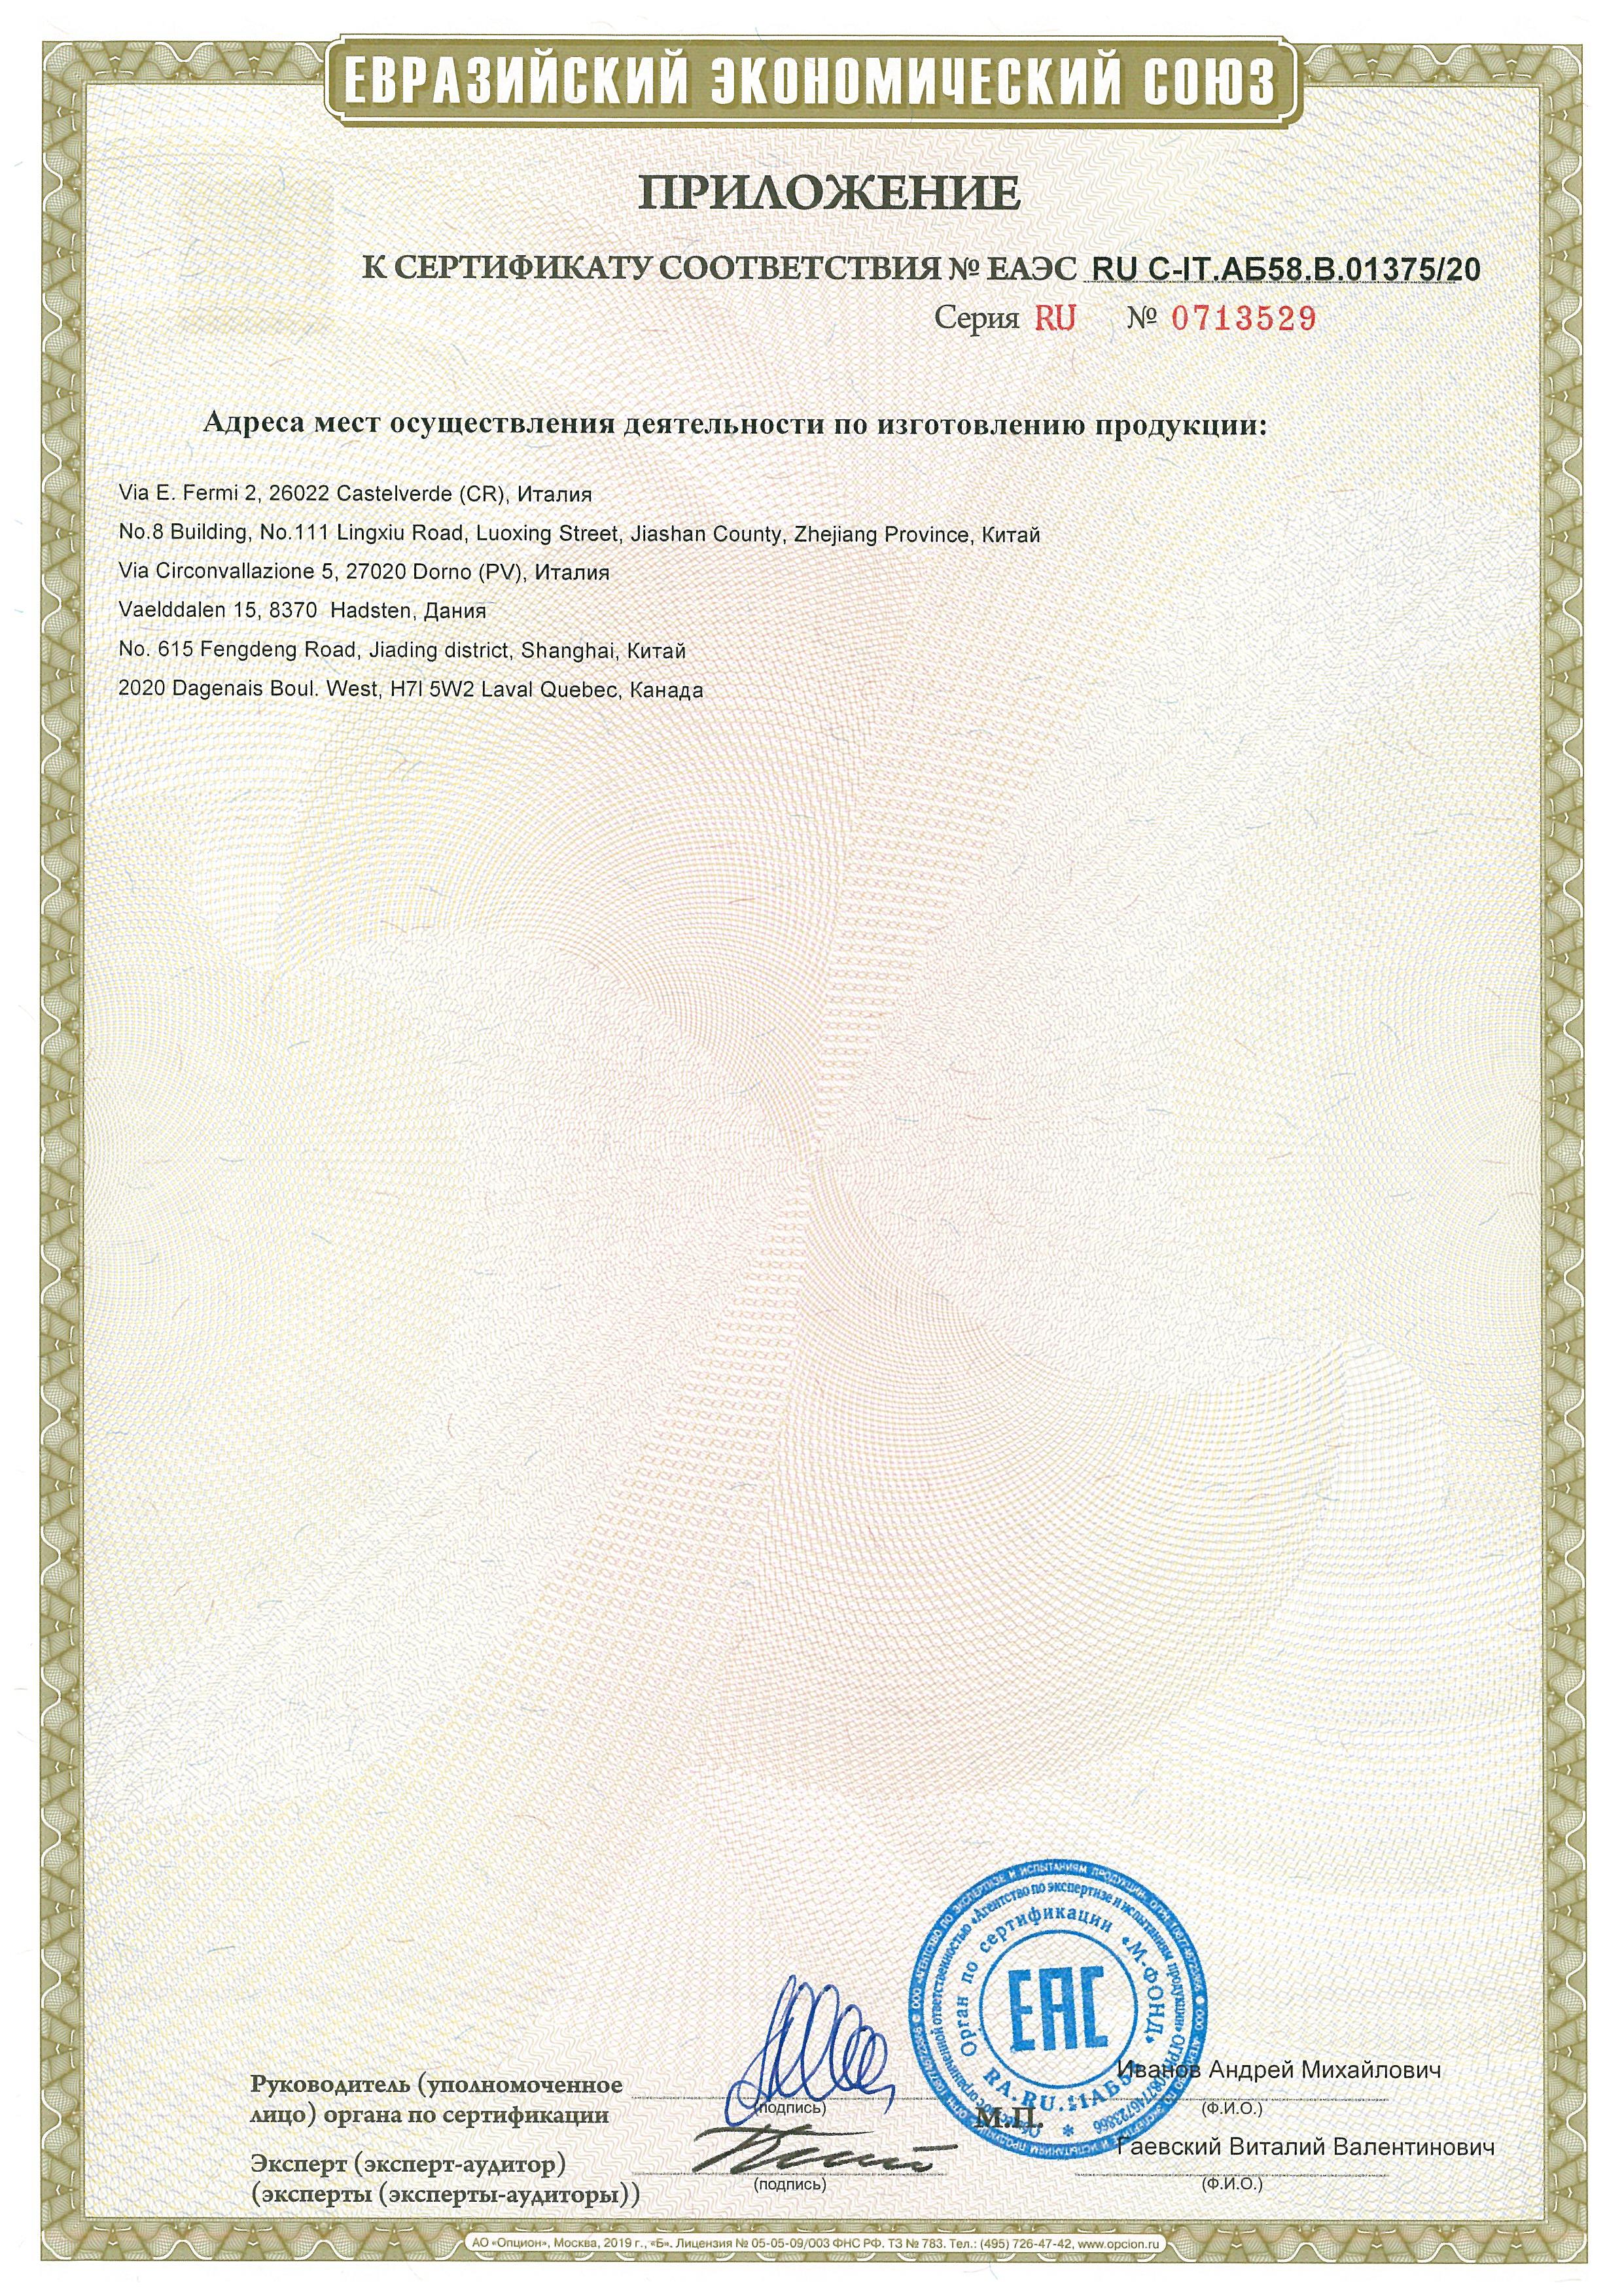 Сертификат соответствия  IPC Portotecnika, IPC Soteco, PANDA, TORNADO